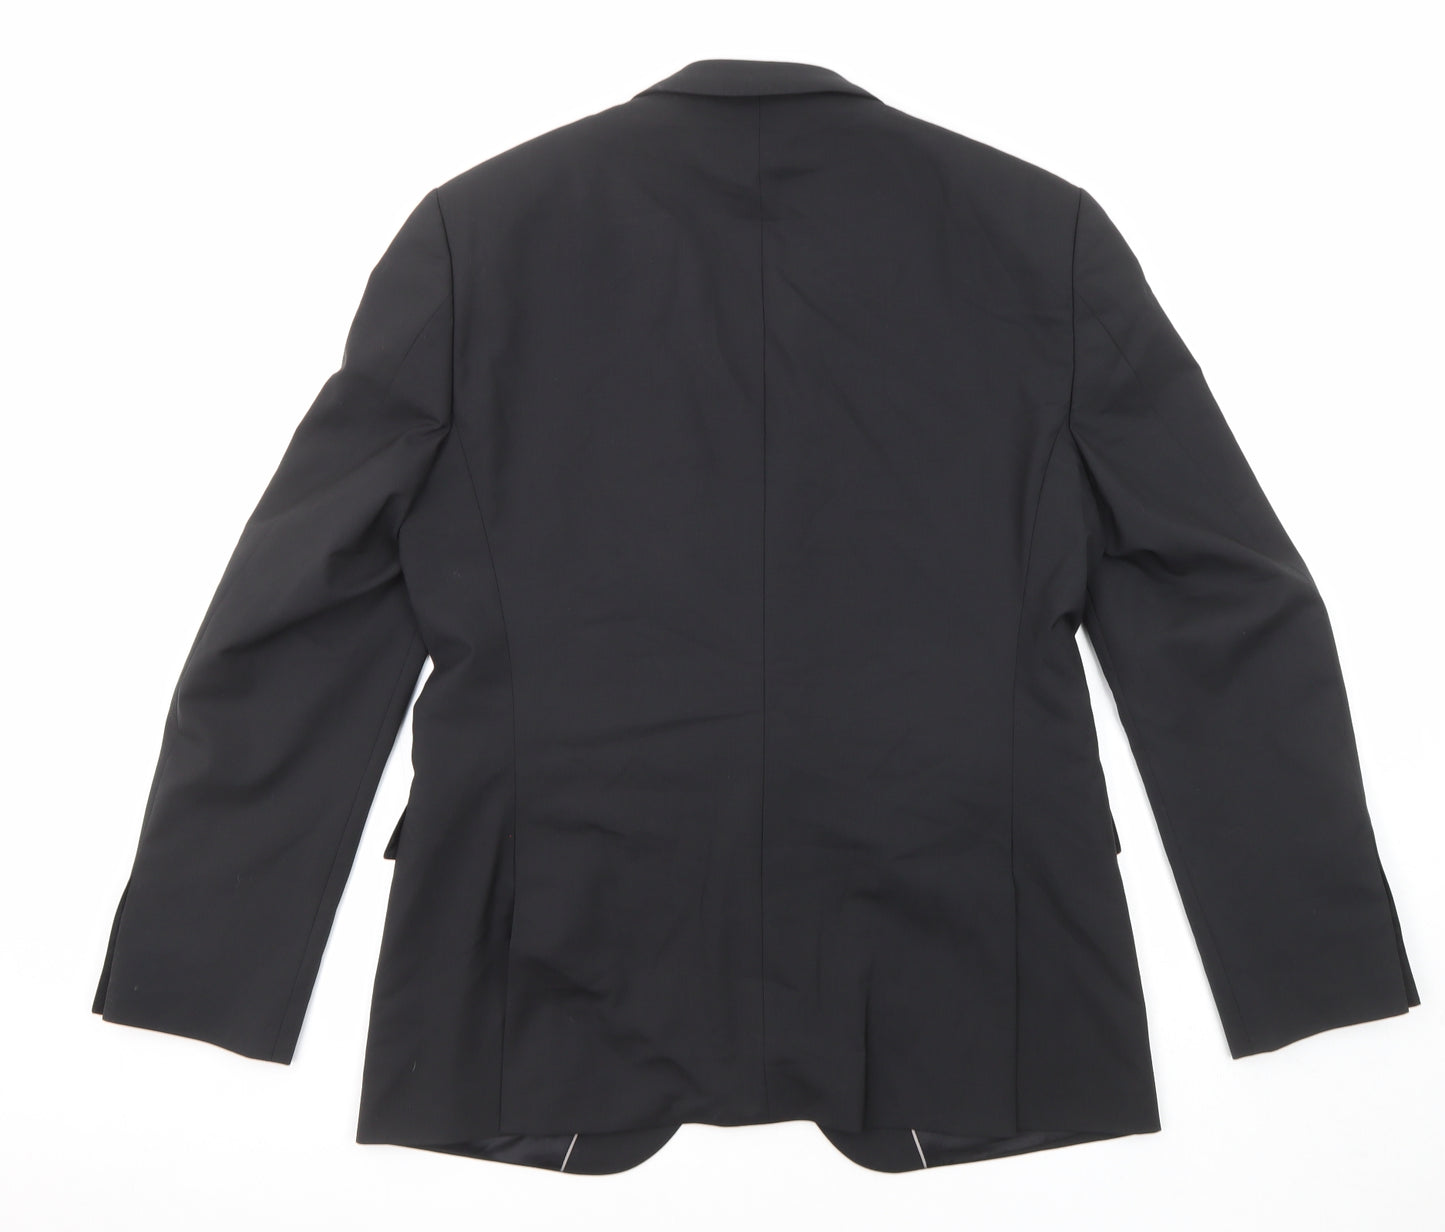 HUGO BOSS Mens Black Cotton Jacket Suit Jacket Size 50 Regular